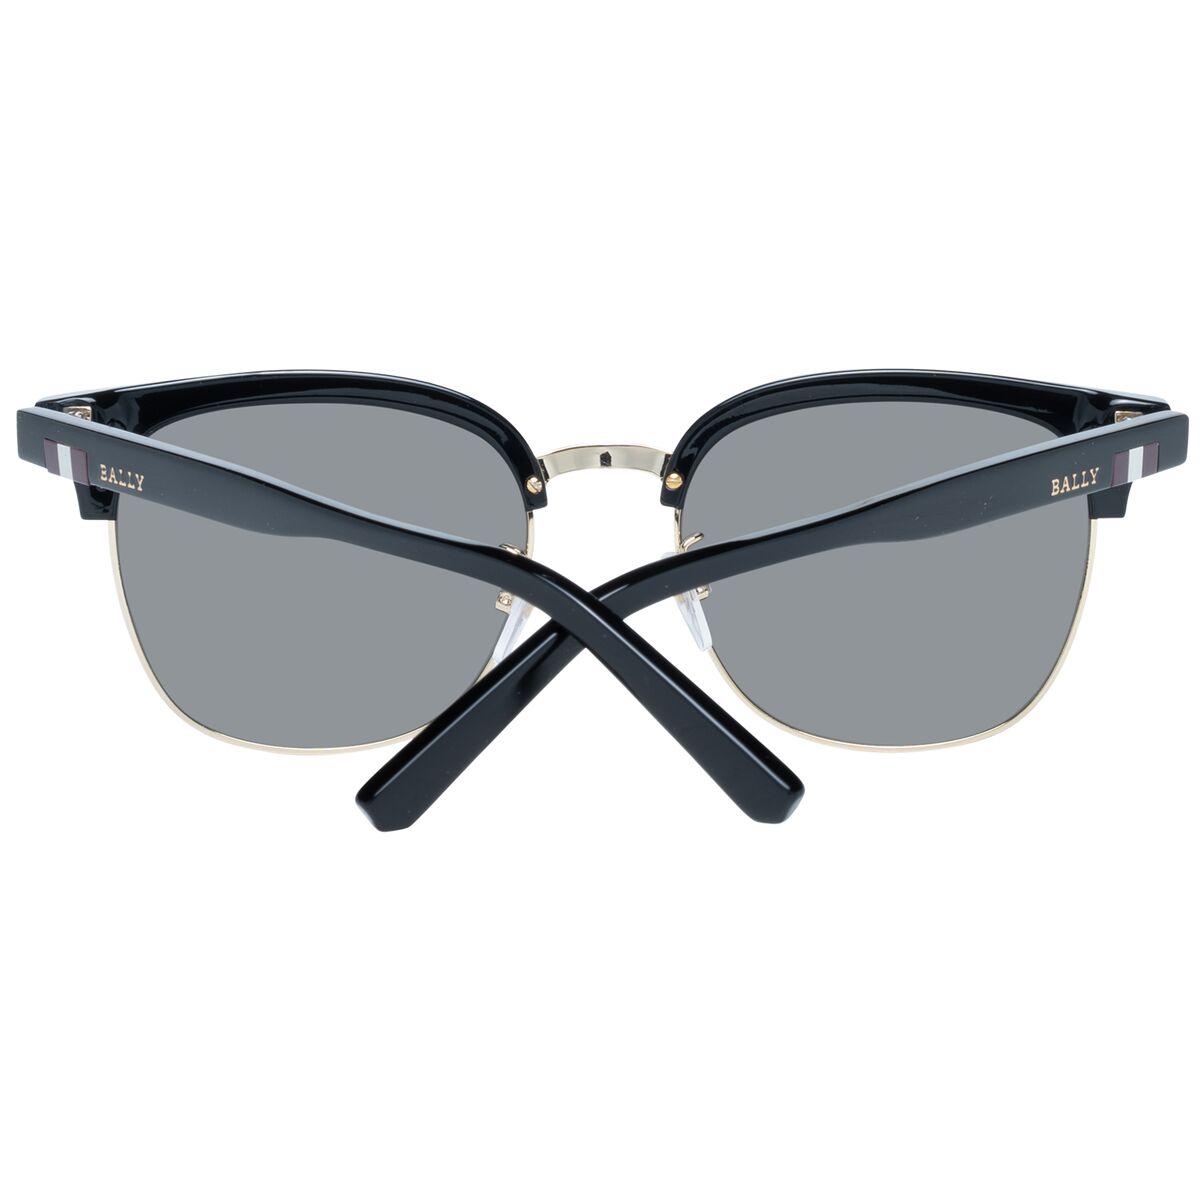 Kaufe Herrensonnenbrille Bally BY0049-K 5601D bei AWK Flagship um € 114.00